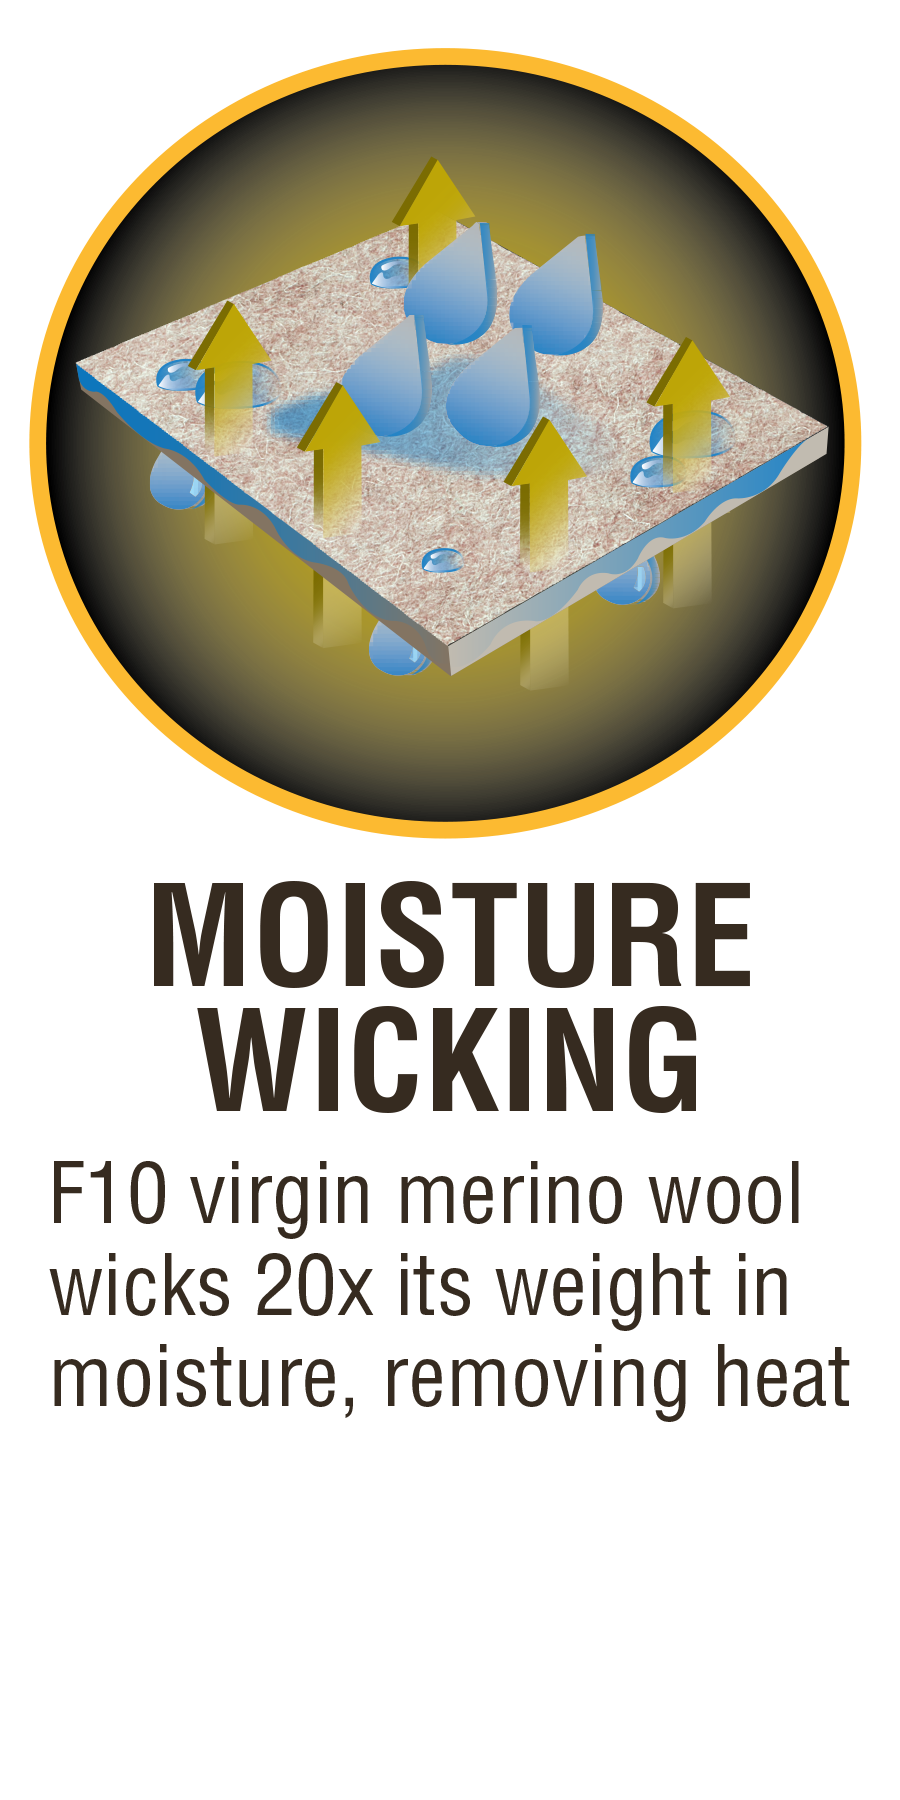 Moisture Wicking F10 virgin merino wool wicks 20 times its weight in moisture, removing heat